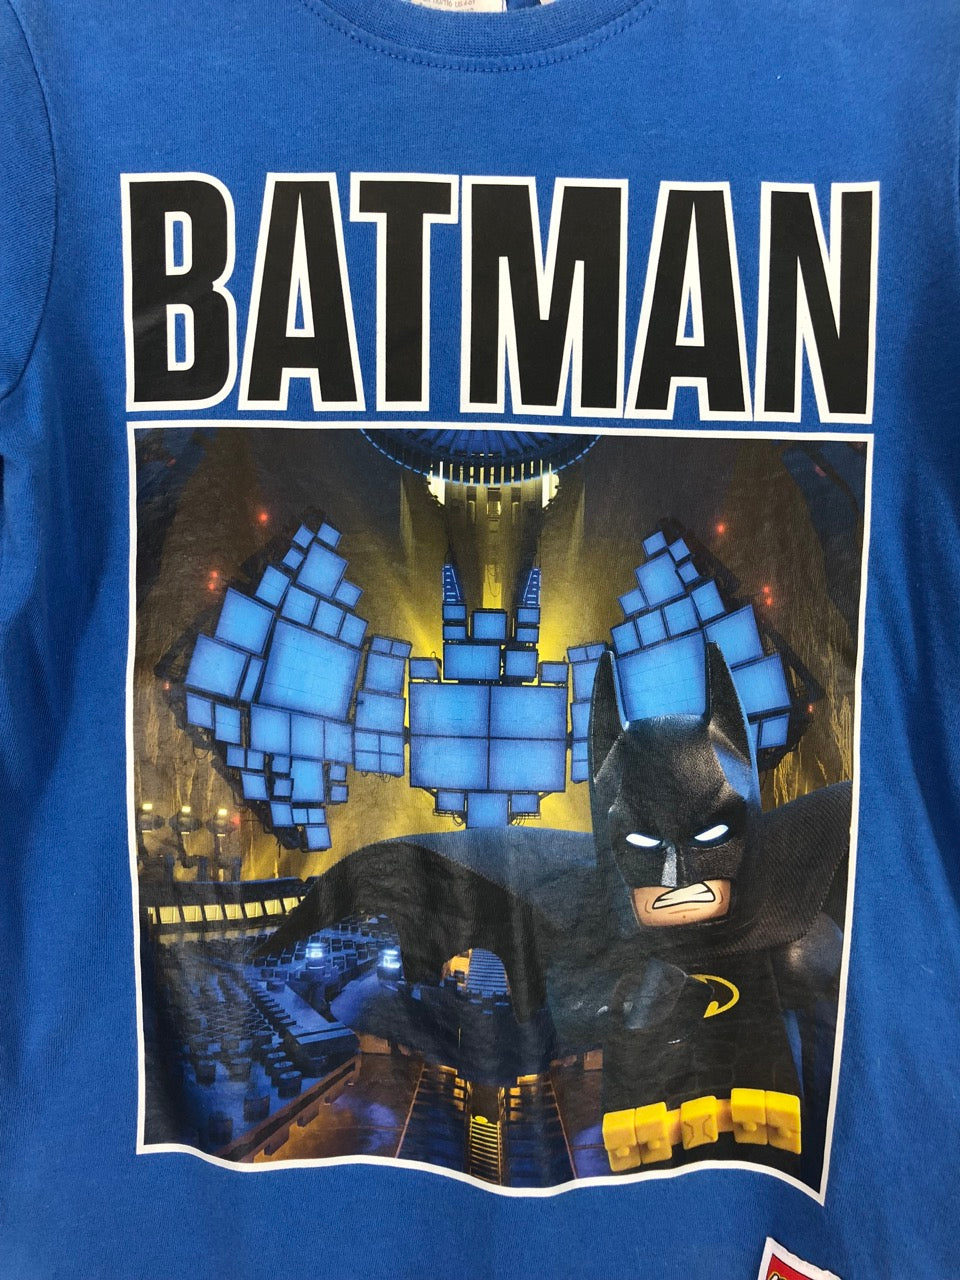 Kids' Lego Batman T-Shirt